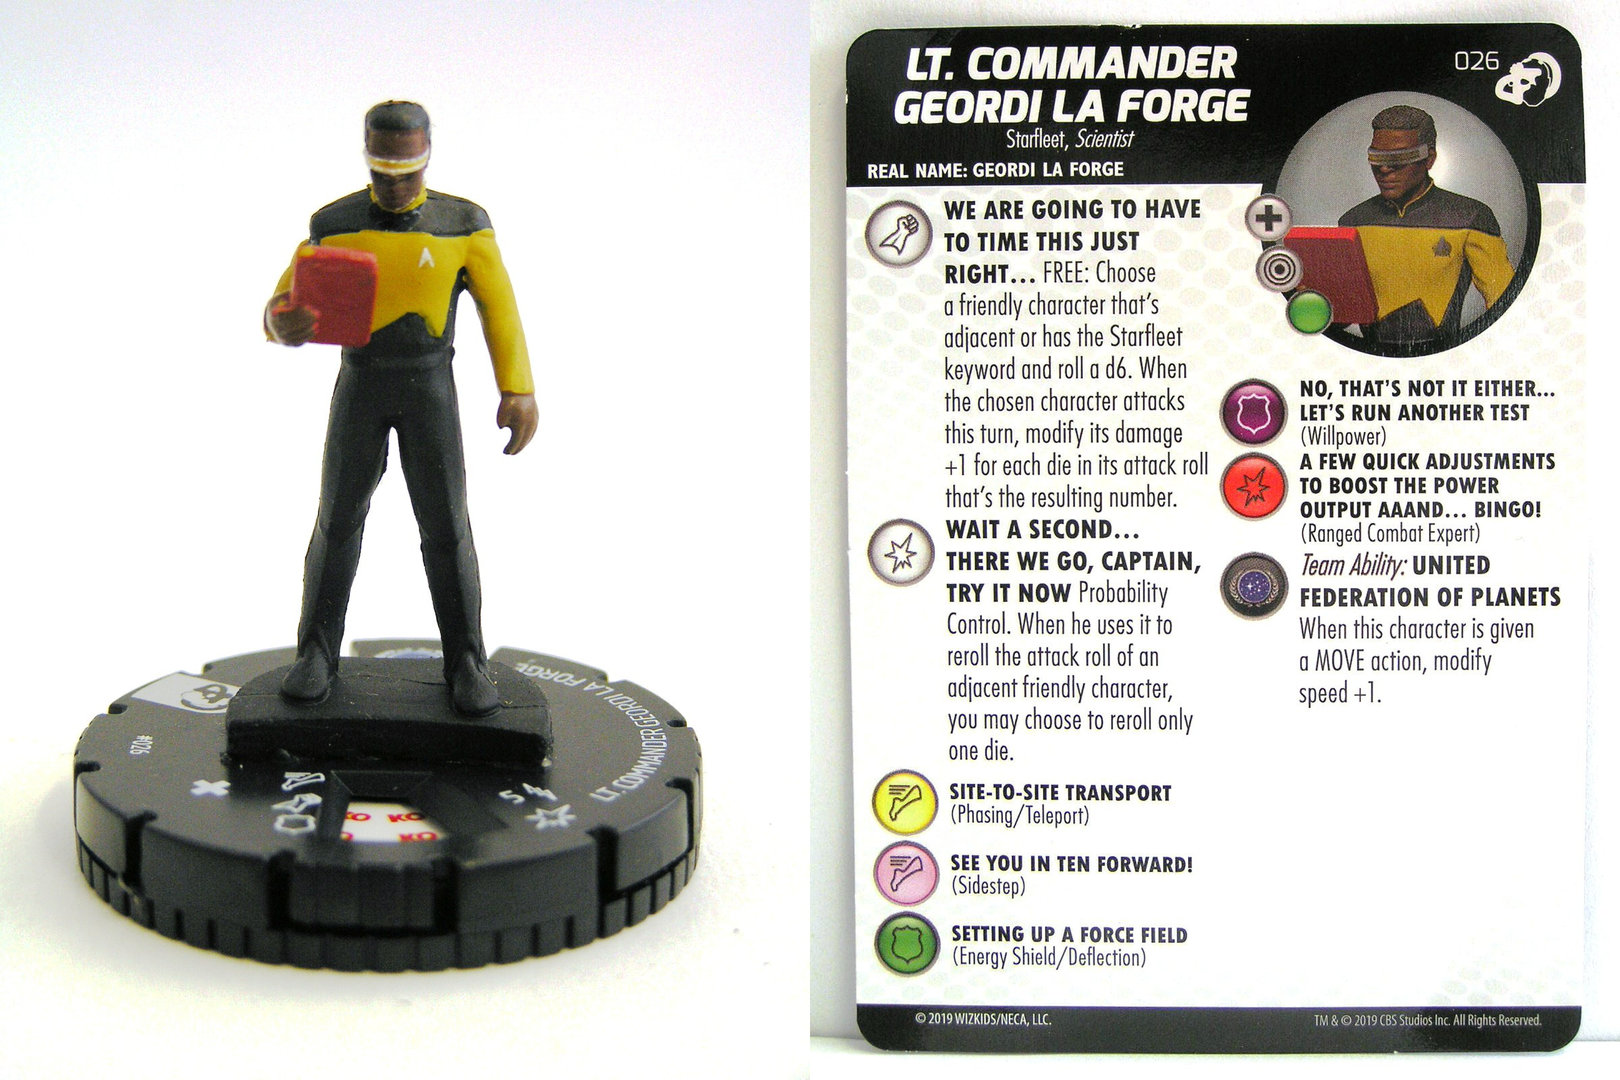 Commander Geordi La Forge Star Trek Resistance is Futile #026 Lt HeroClix